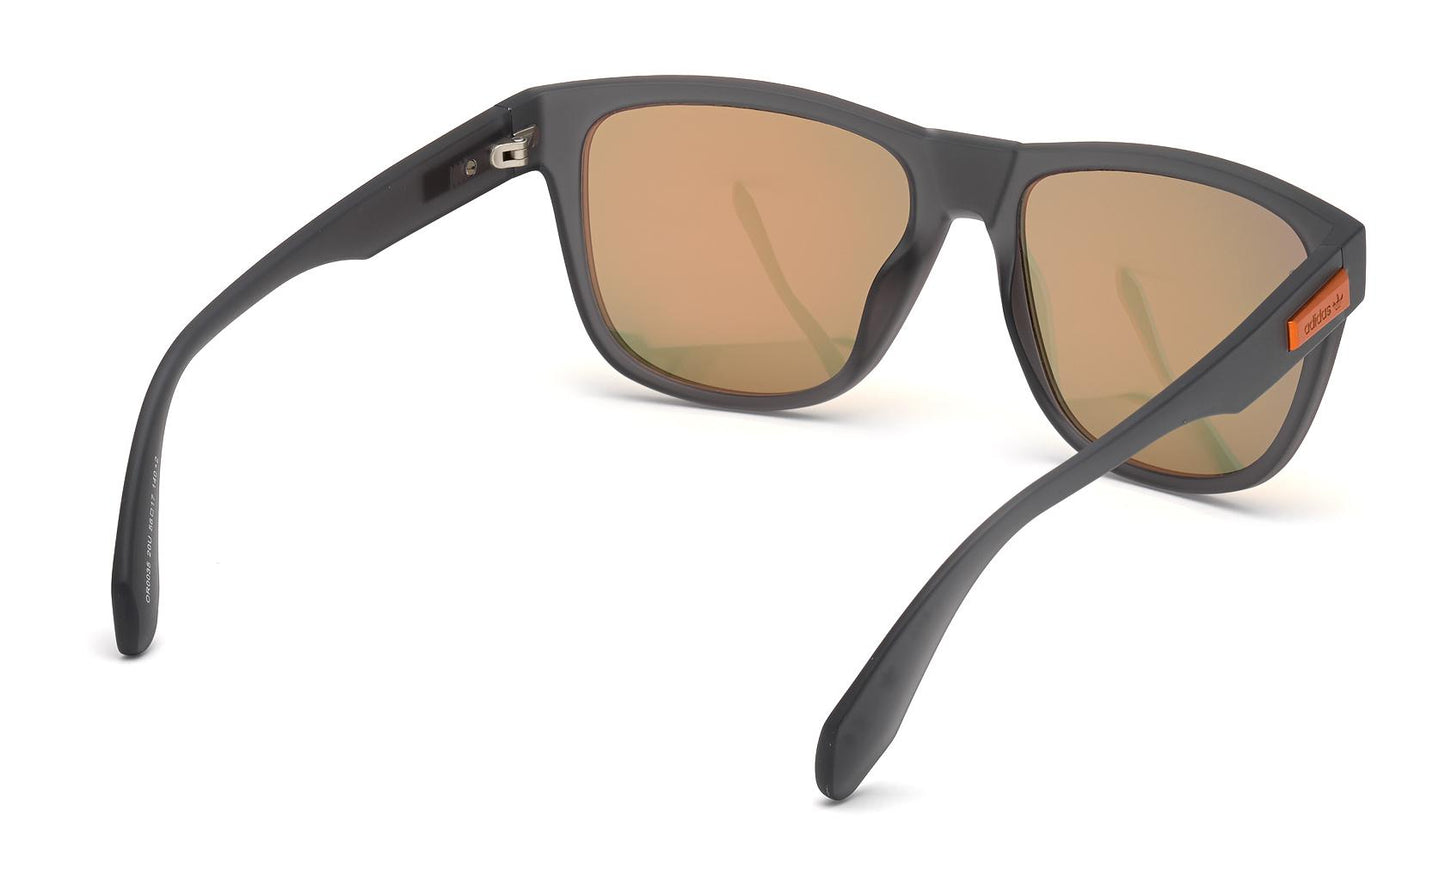 Adidas Originals Sunglasses OR0035 20U